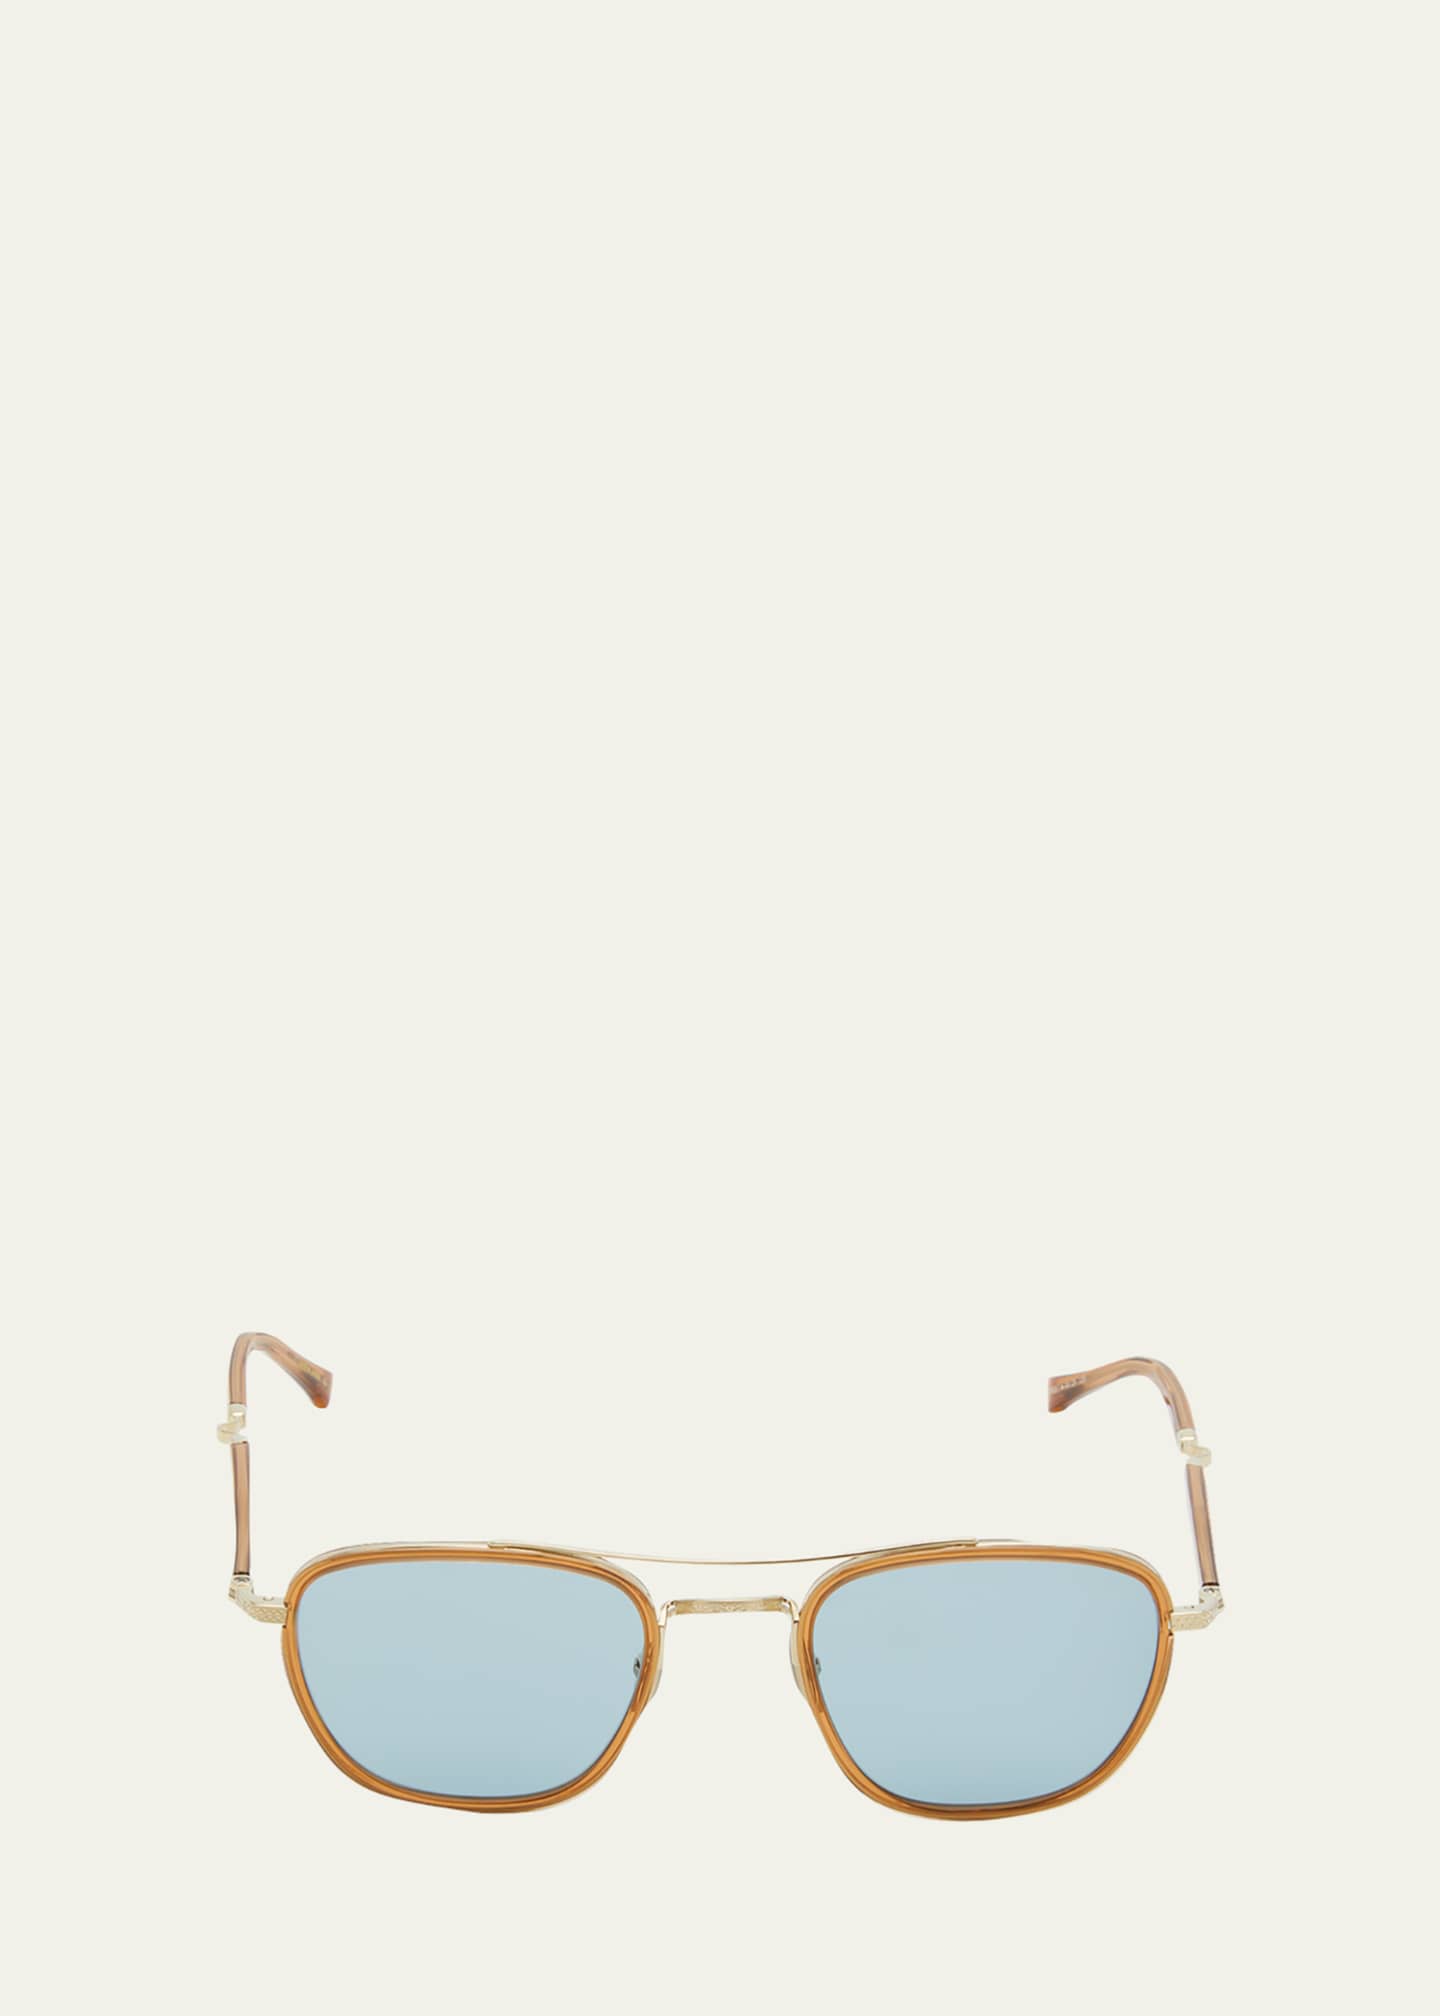 Price S - Sunglasses - Mr. Leight